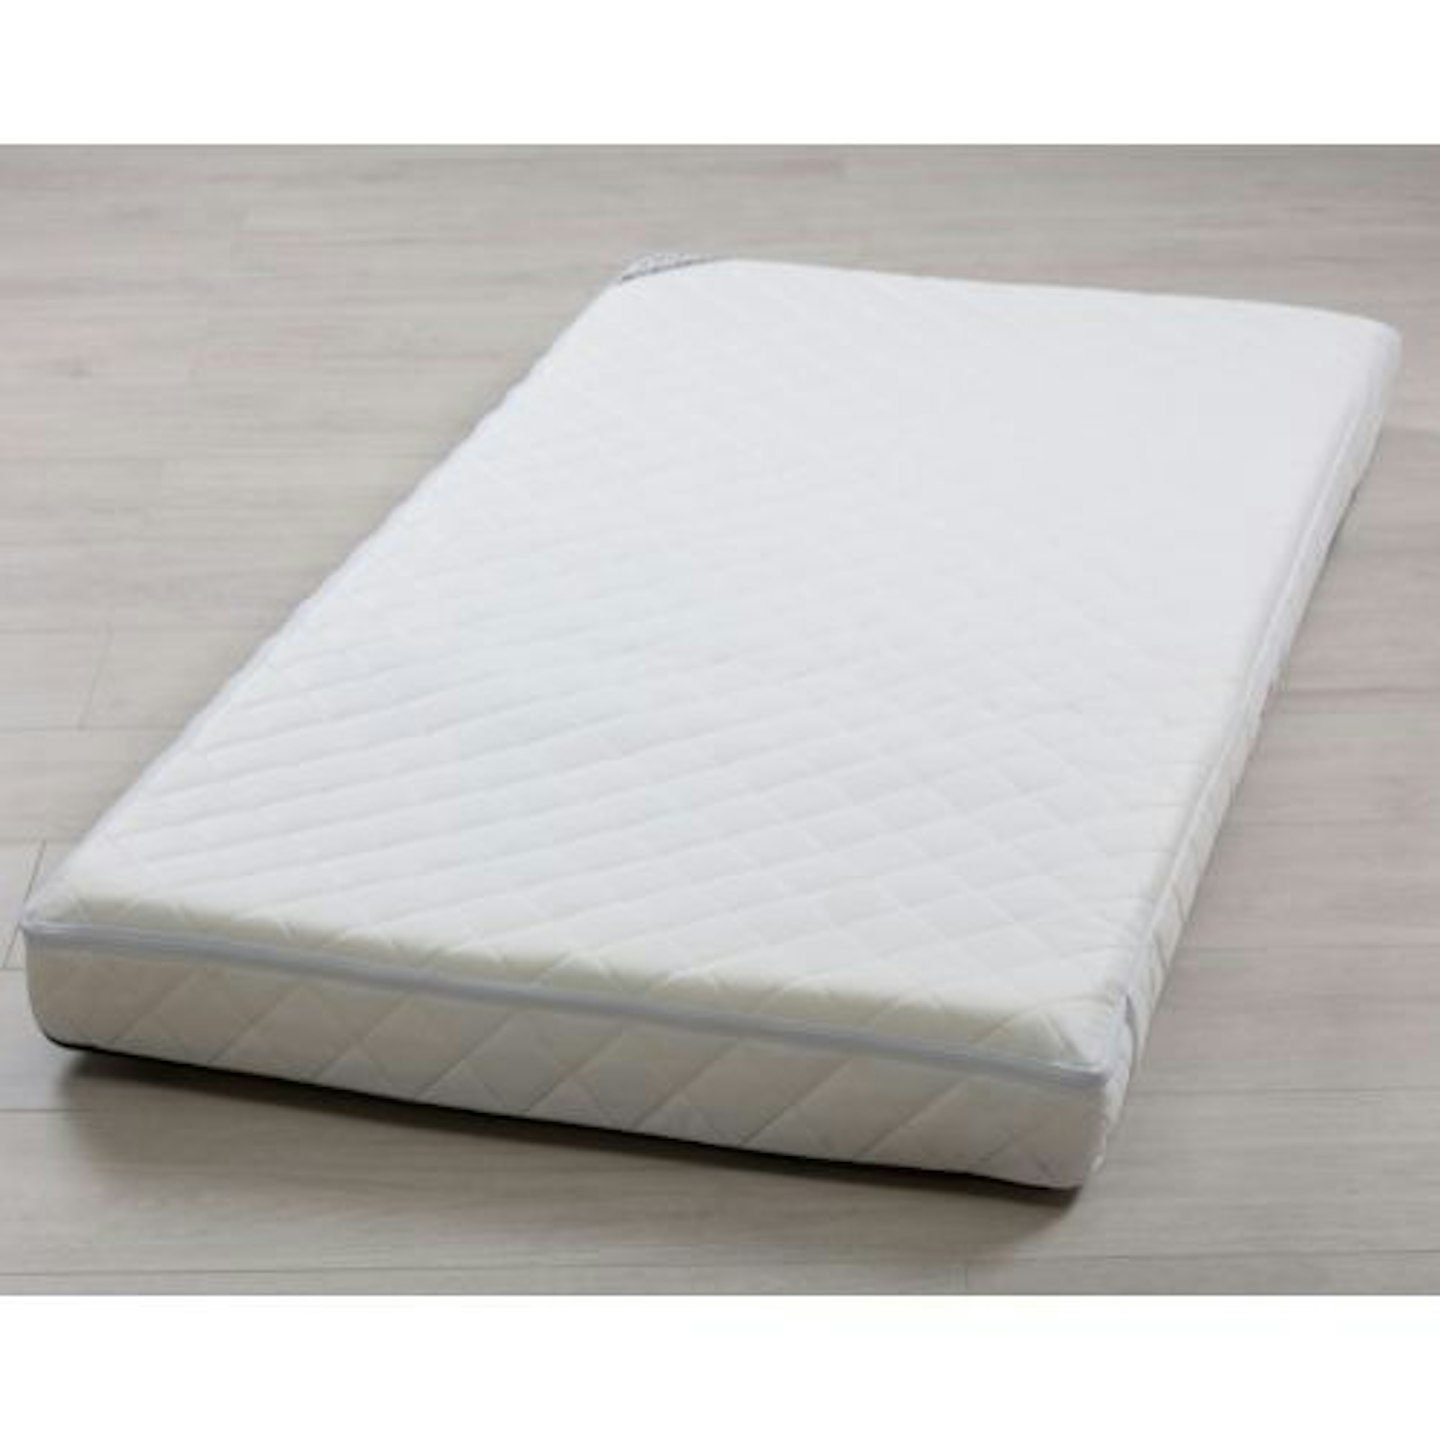 true-fit-superior-mattress